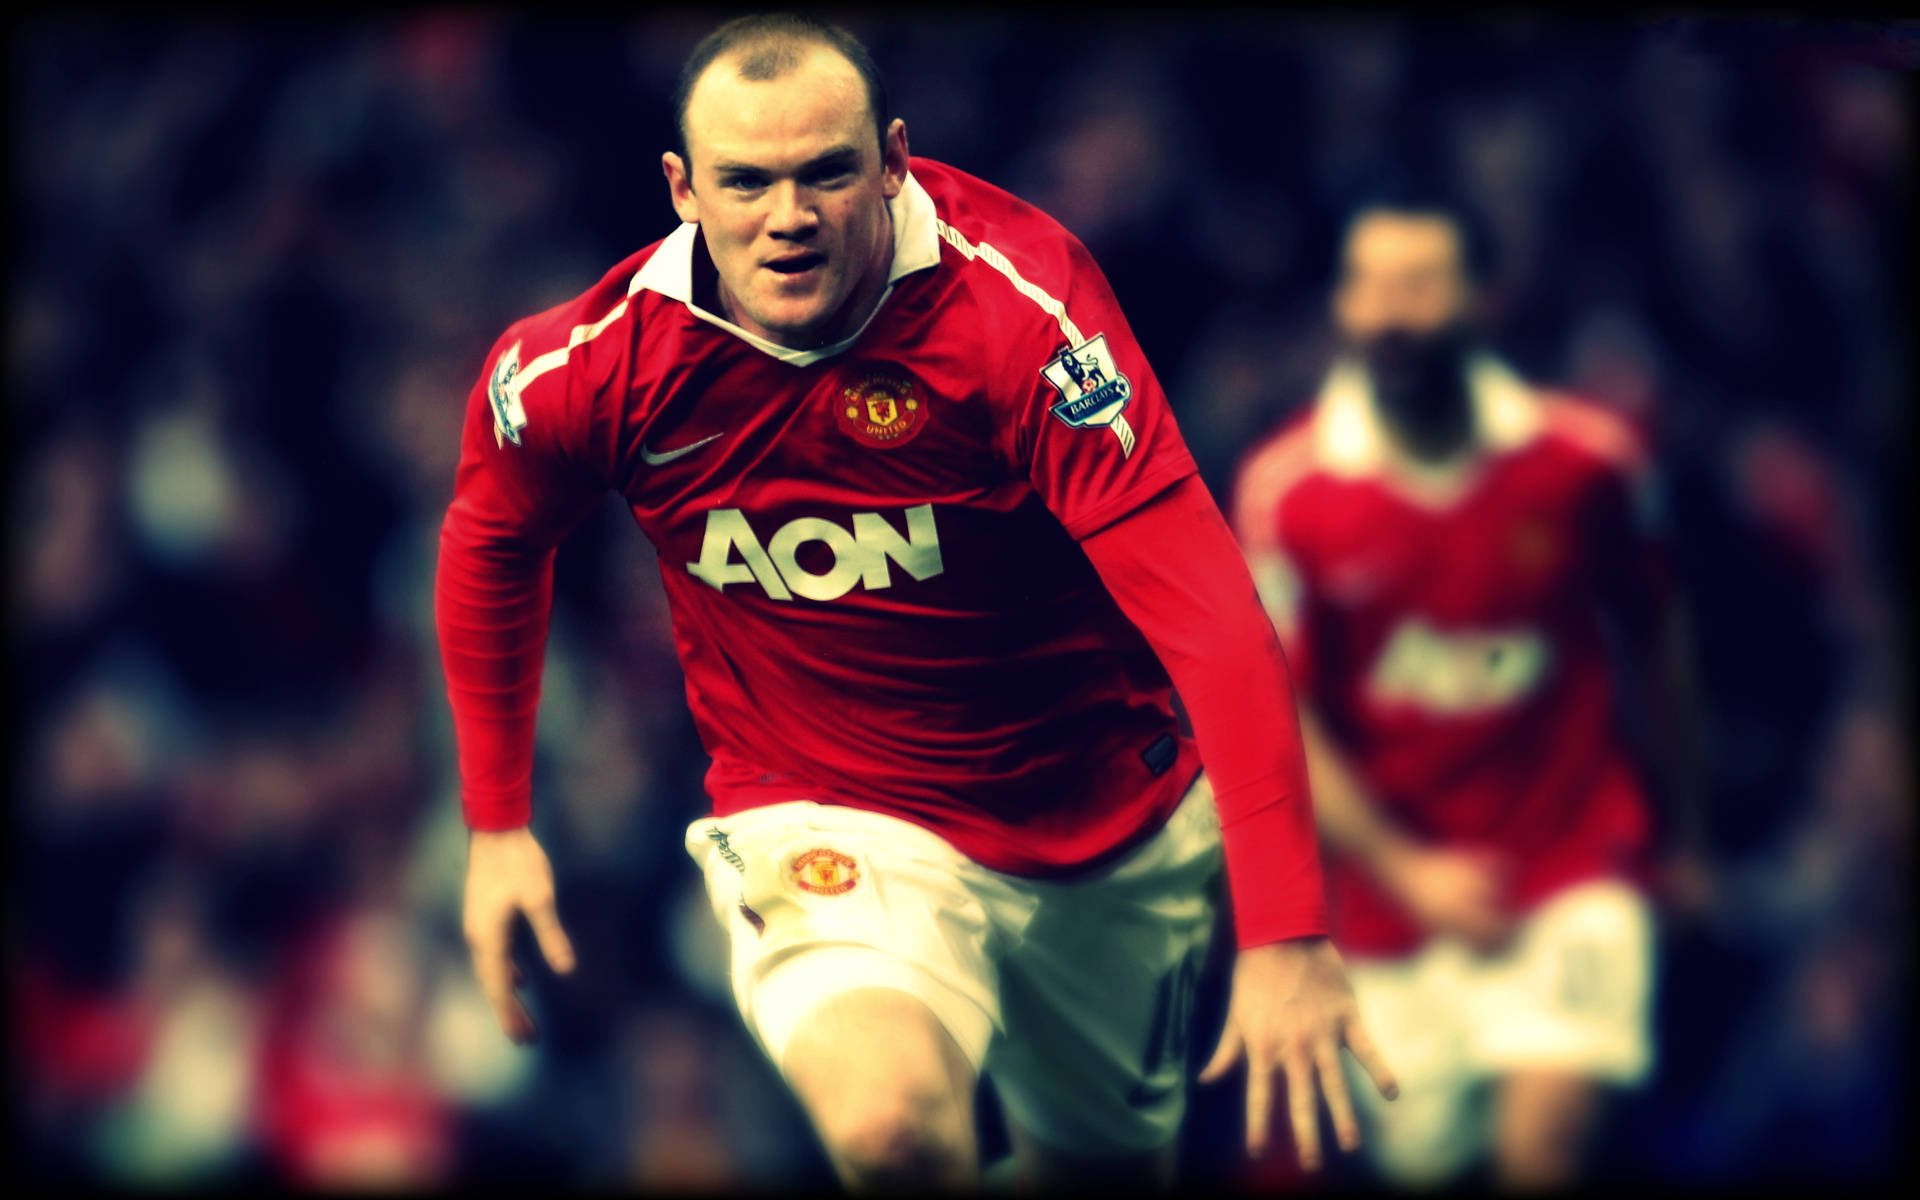 Wayne Rooney Football Player